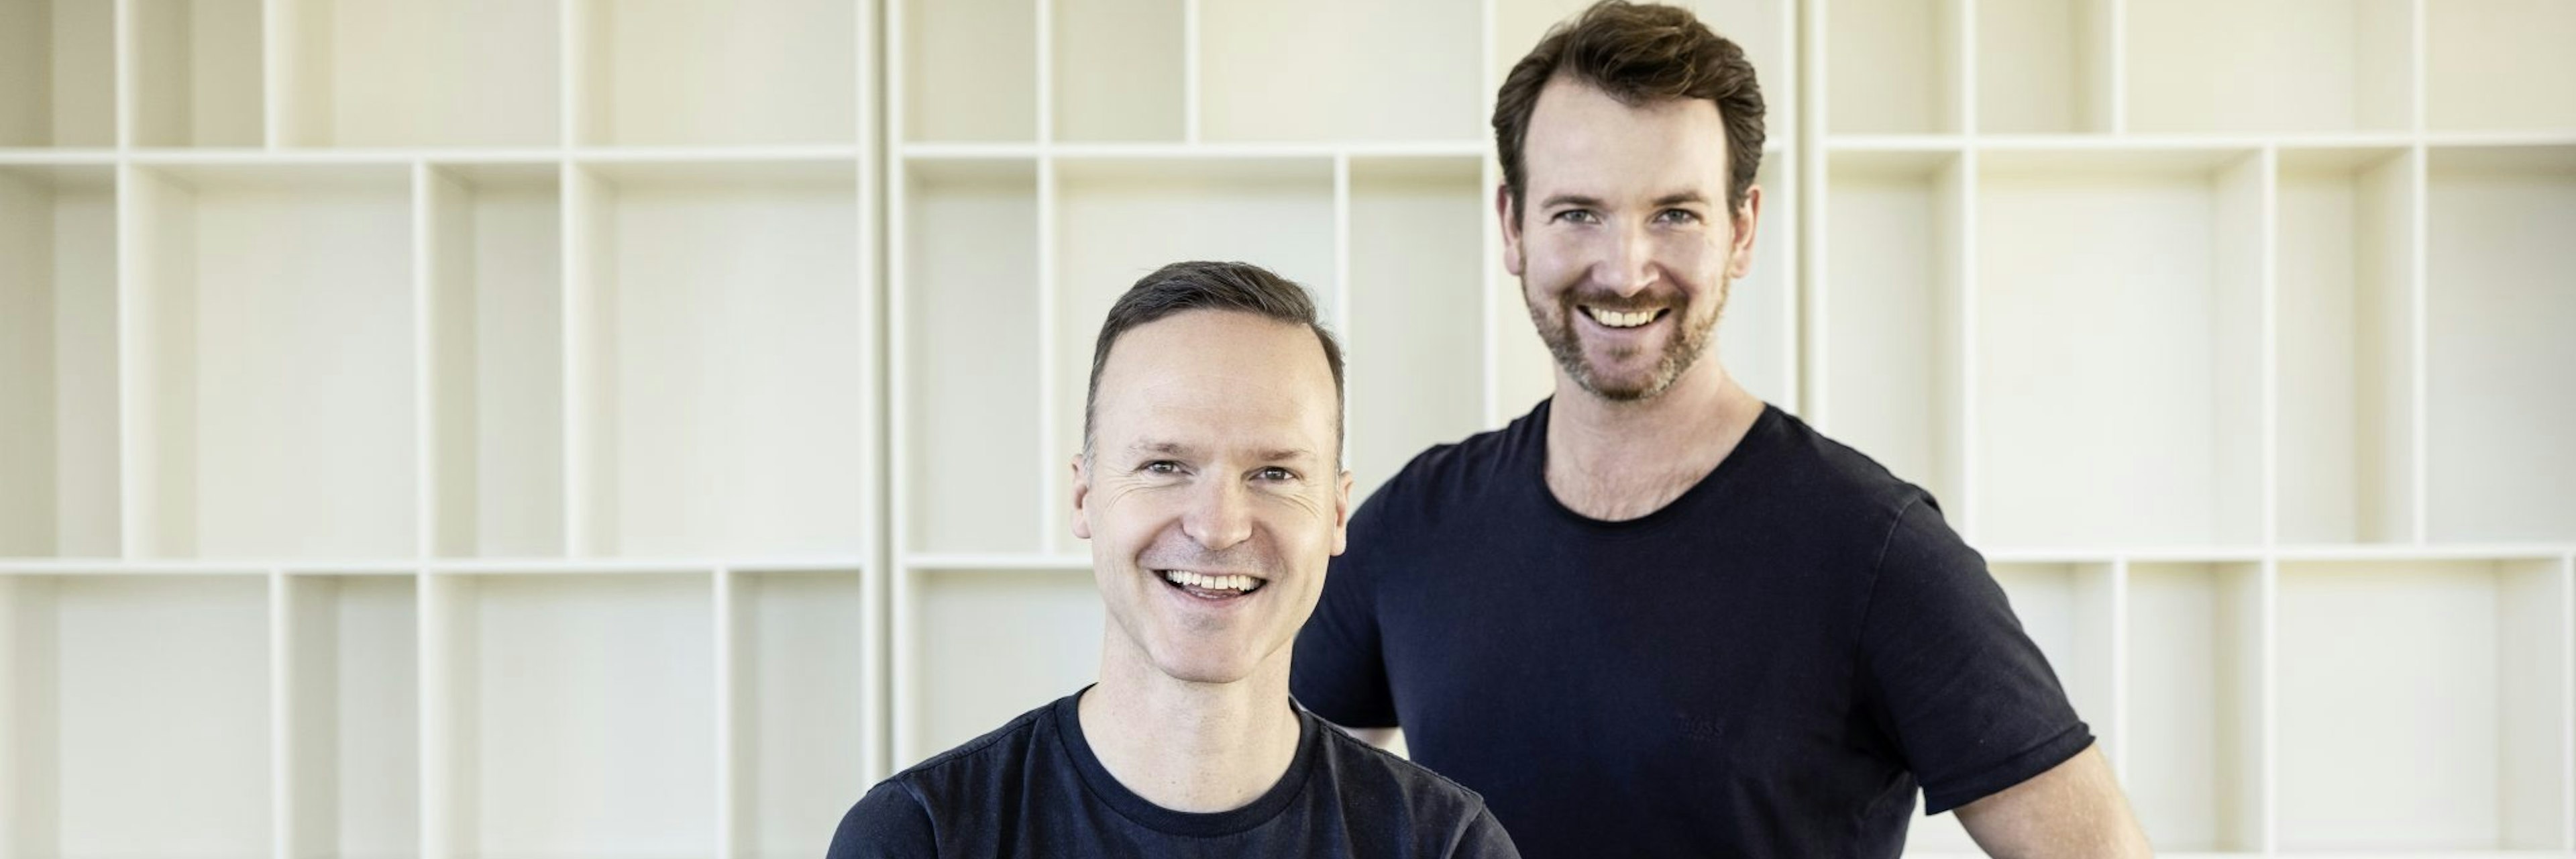 YZR founders Reinhard Meier and Markus Feuerecker